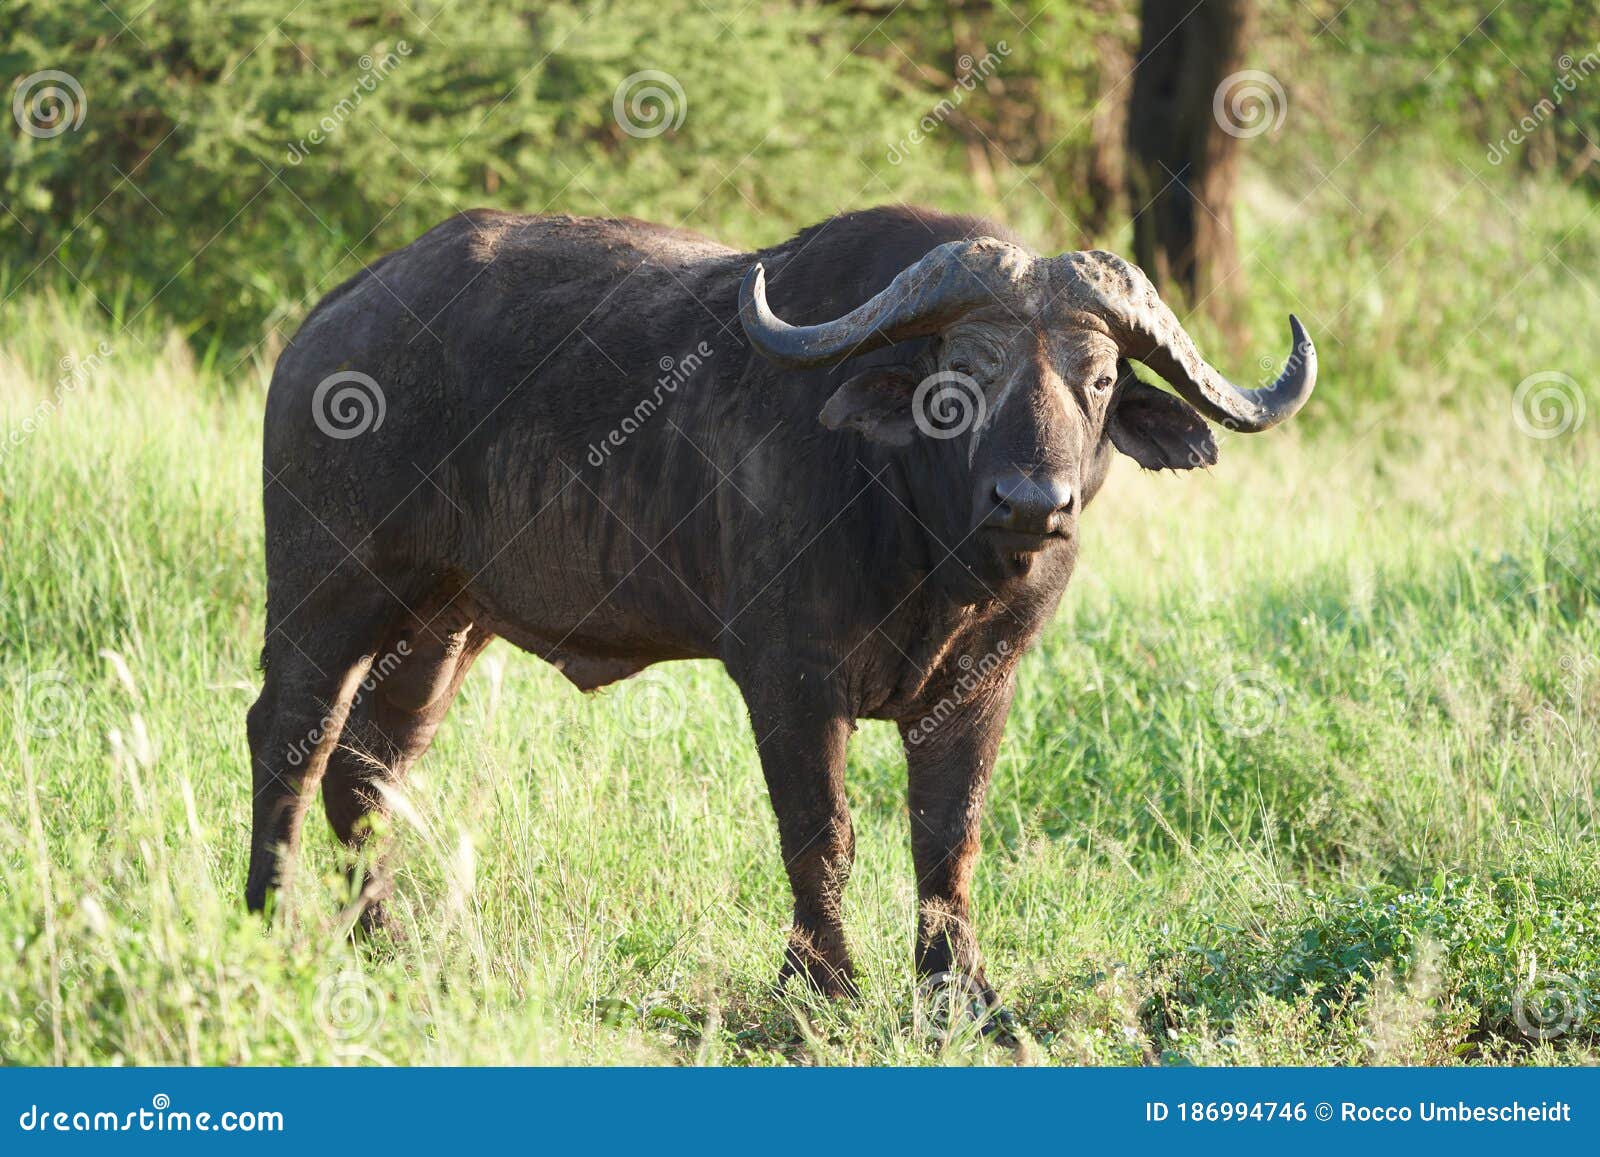 African Water Buffalo Serengeti - Big Five Stock Photo - Image of animal, hunting: 186994746